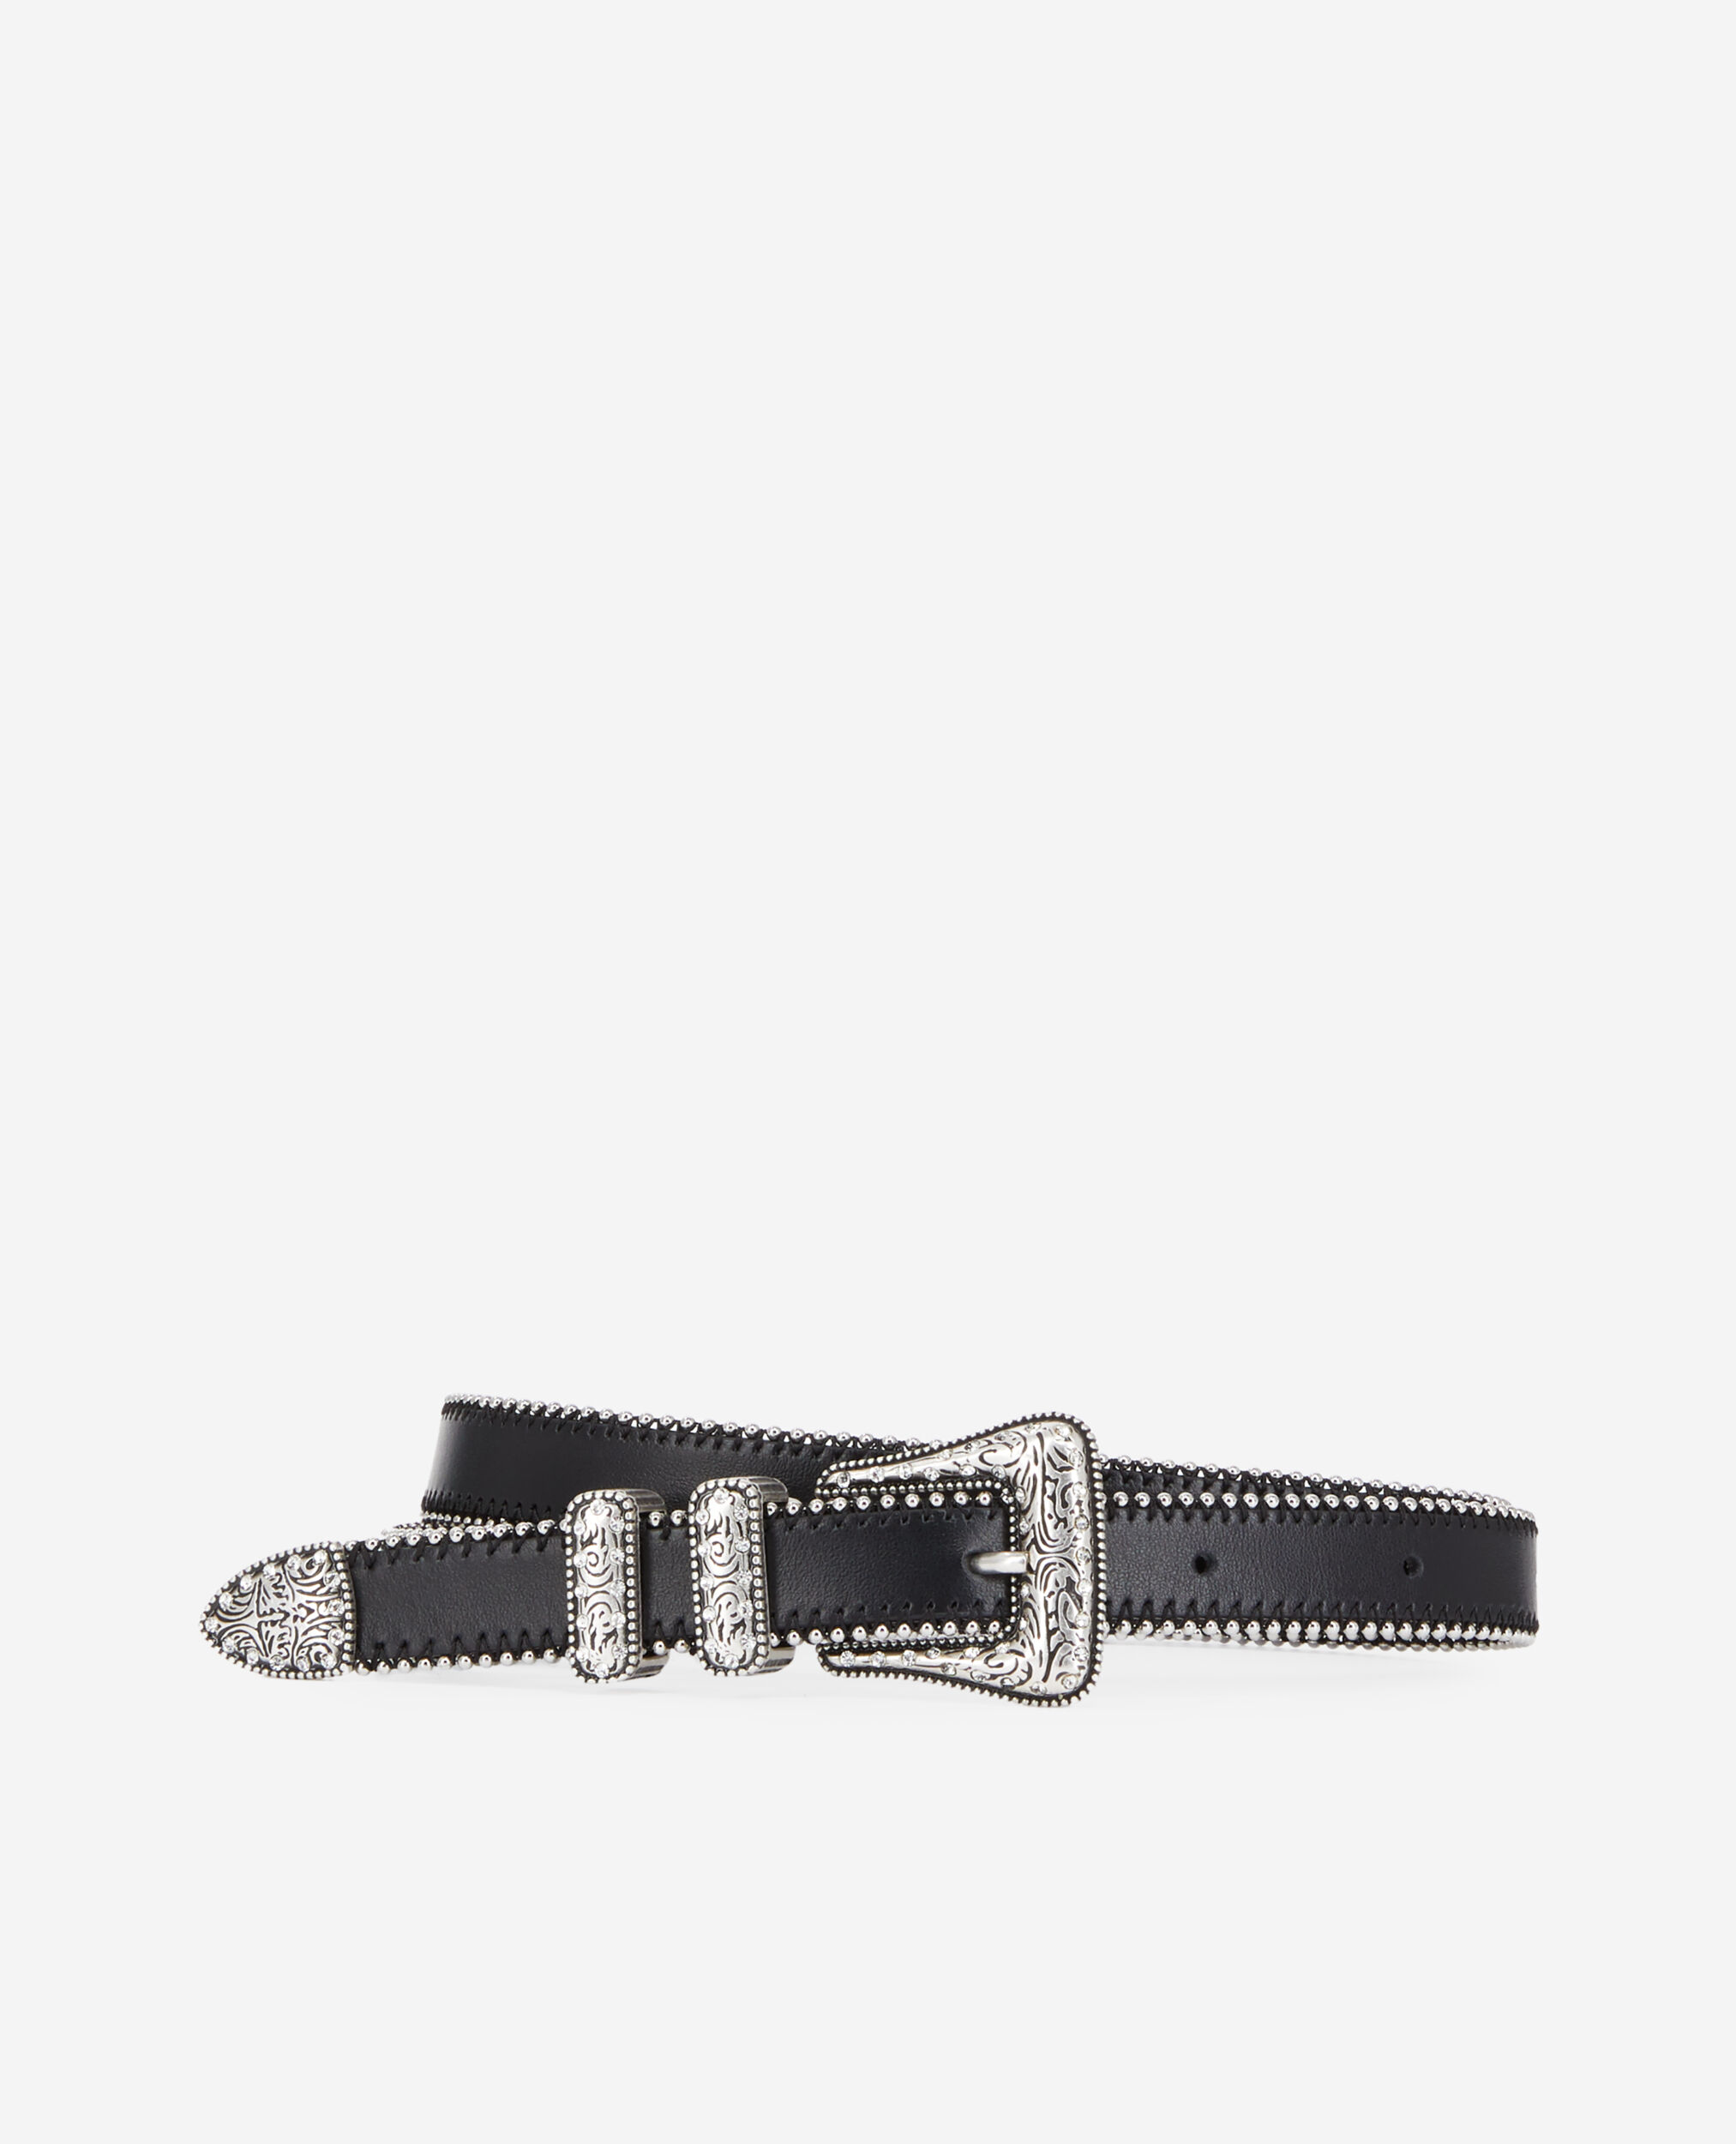 Bead-edged black leather belt with rhinestone Western buckle | The ...